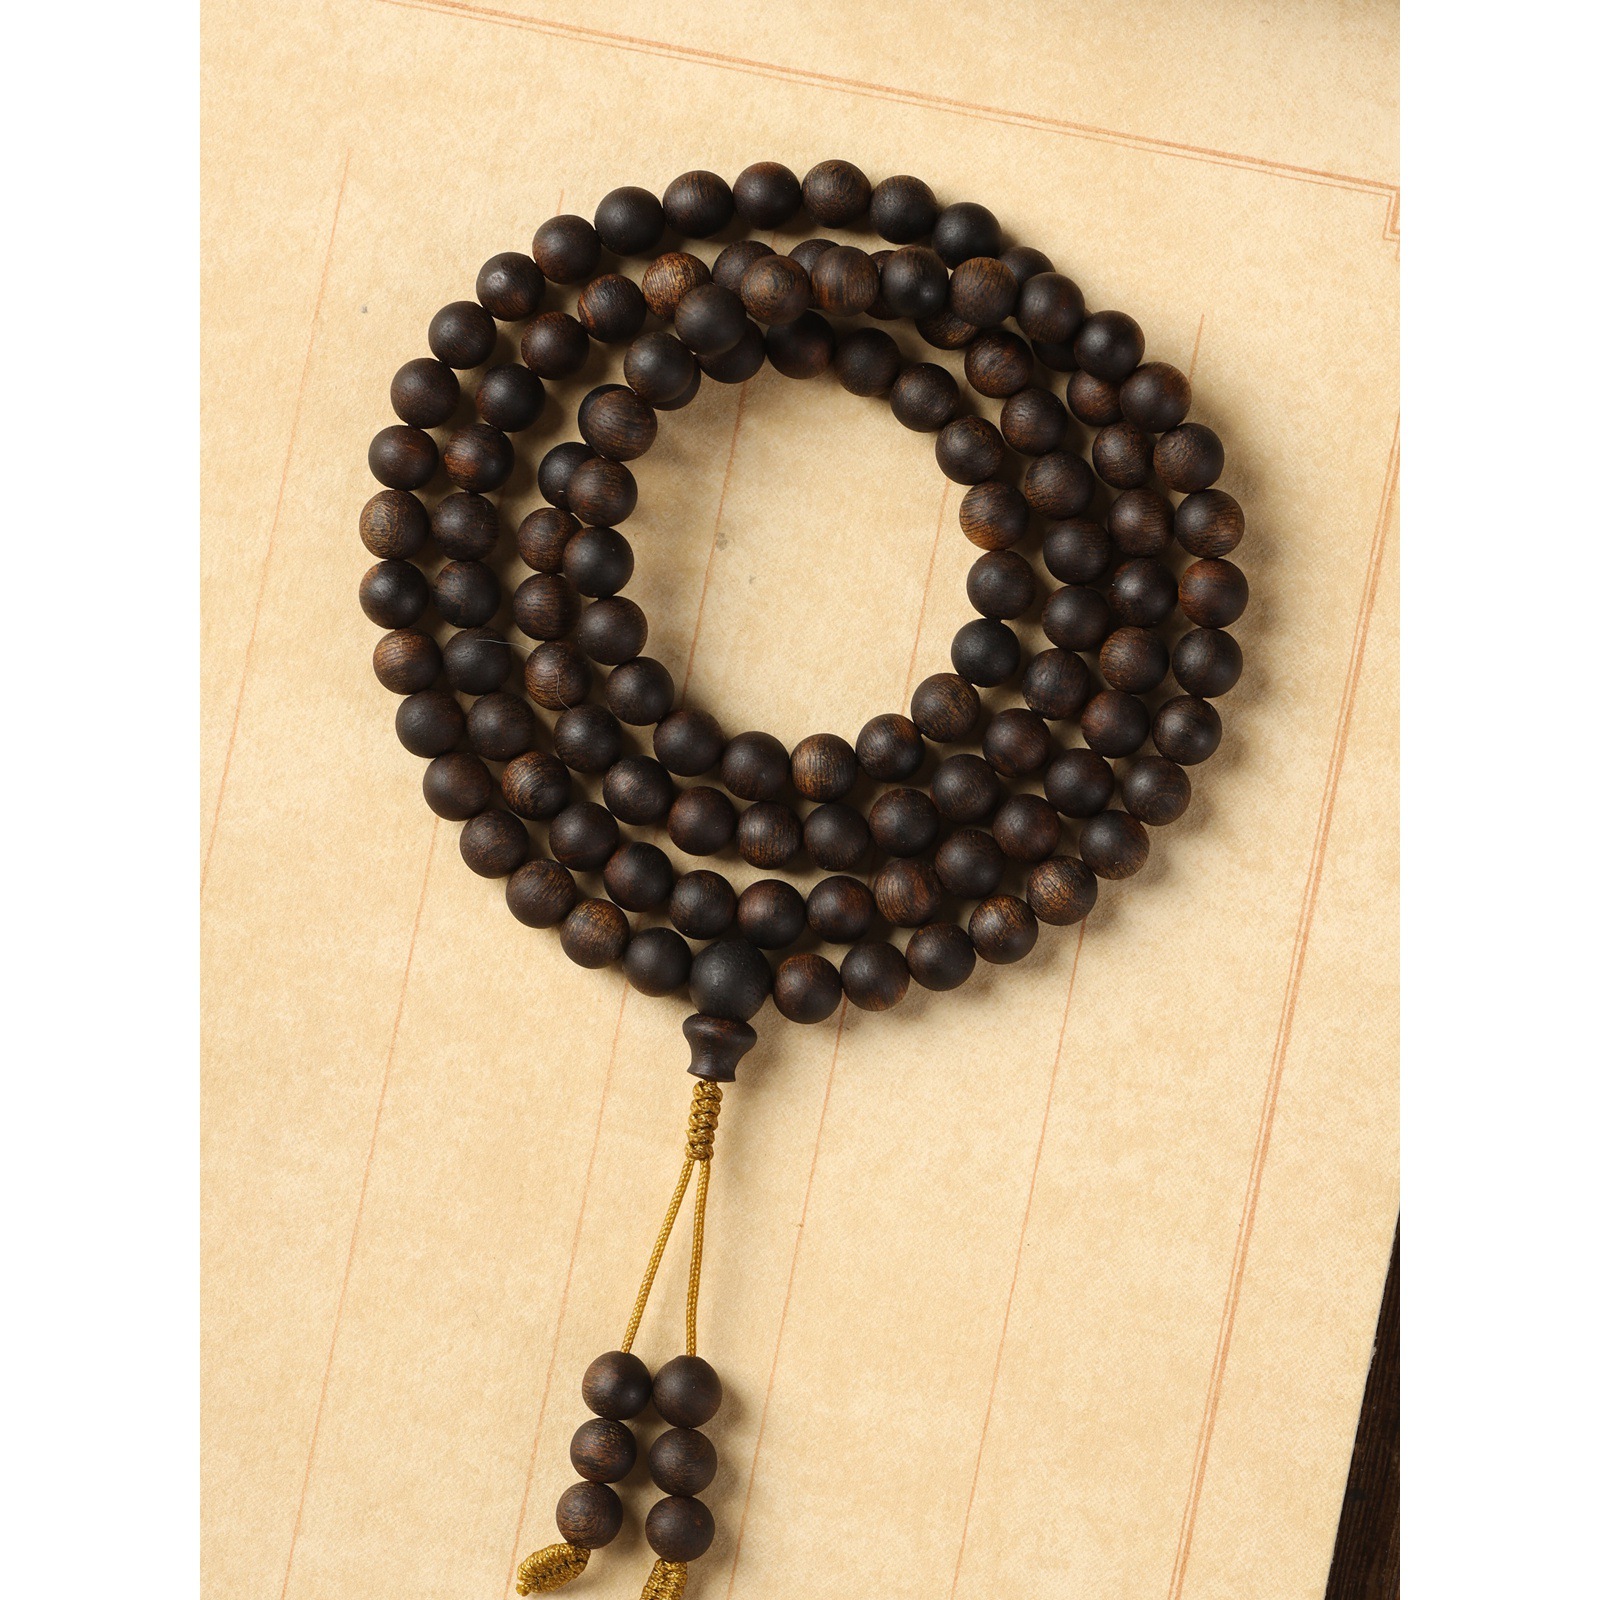 Vietnam Nha Trang White Kyara Agarwood Bracelet 108 Pieces Submerged Natural Old Material Buddha Beads Honey Knot Bracelets for Men and Women